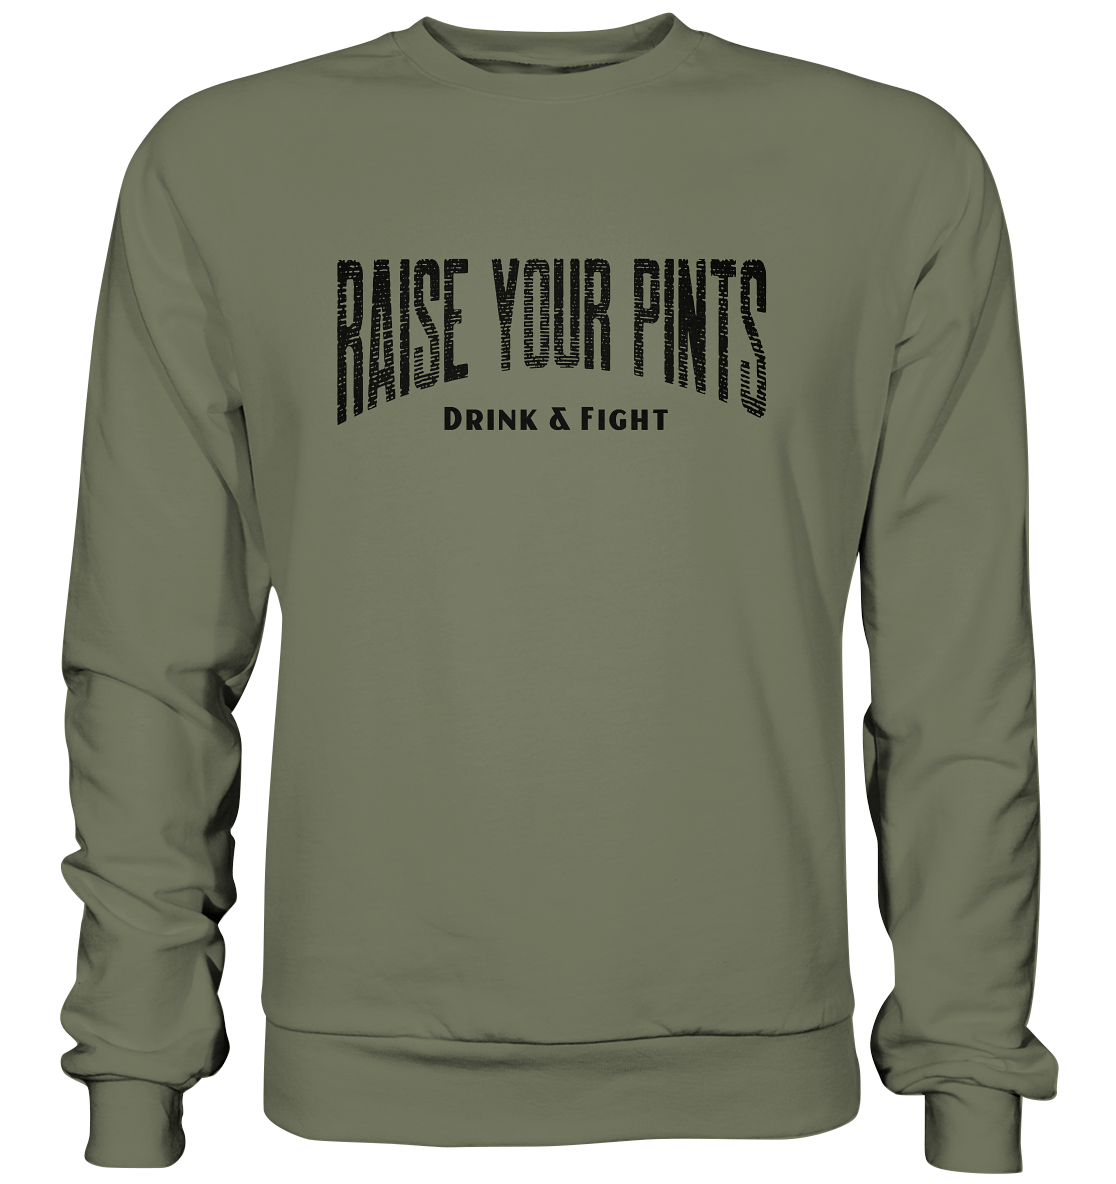 Raise Your Pints "Drink & Fight" - Premium Sweatshirt